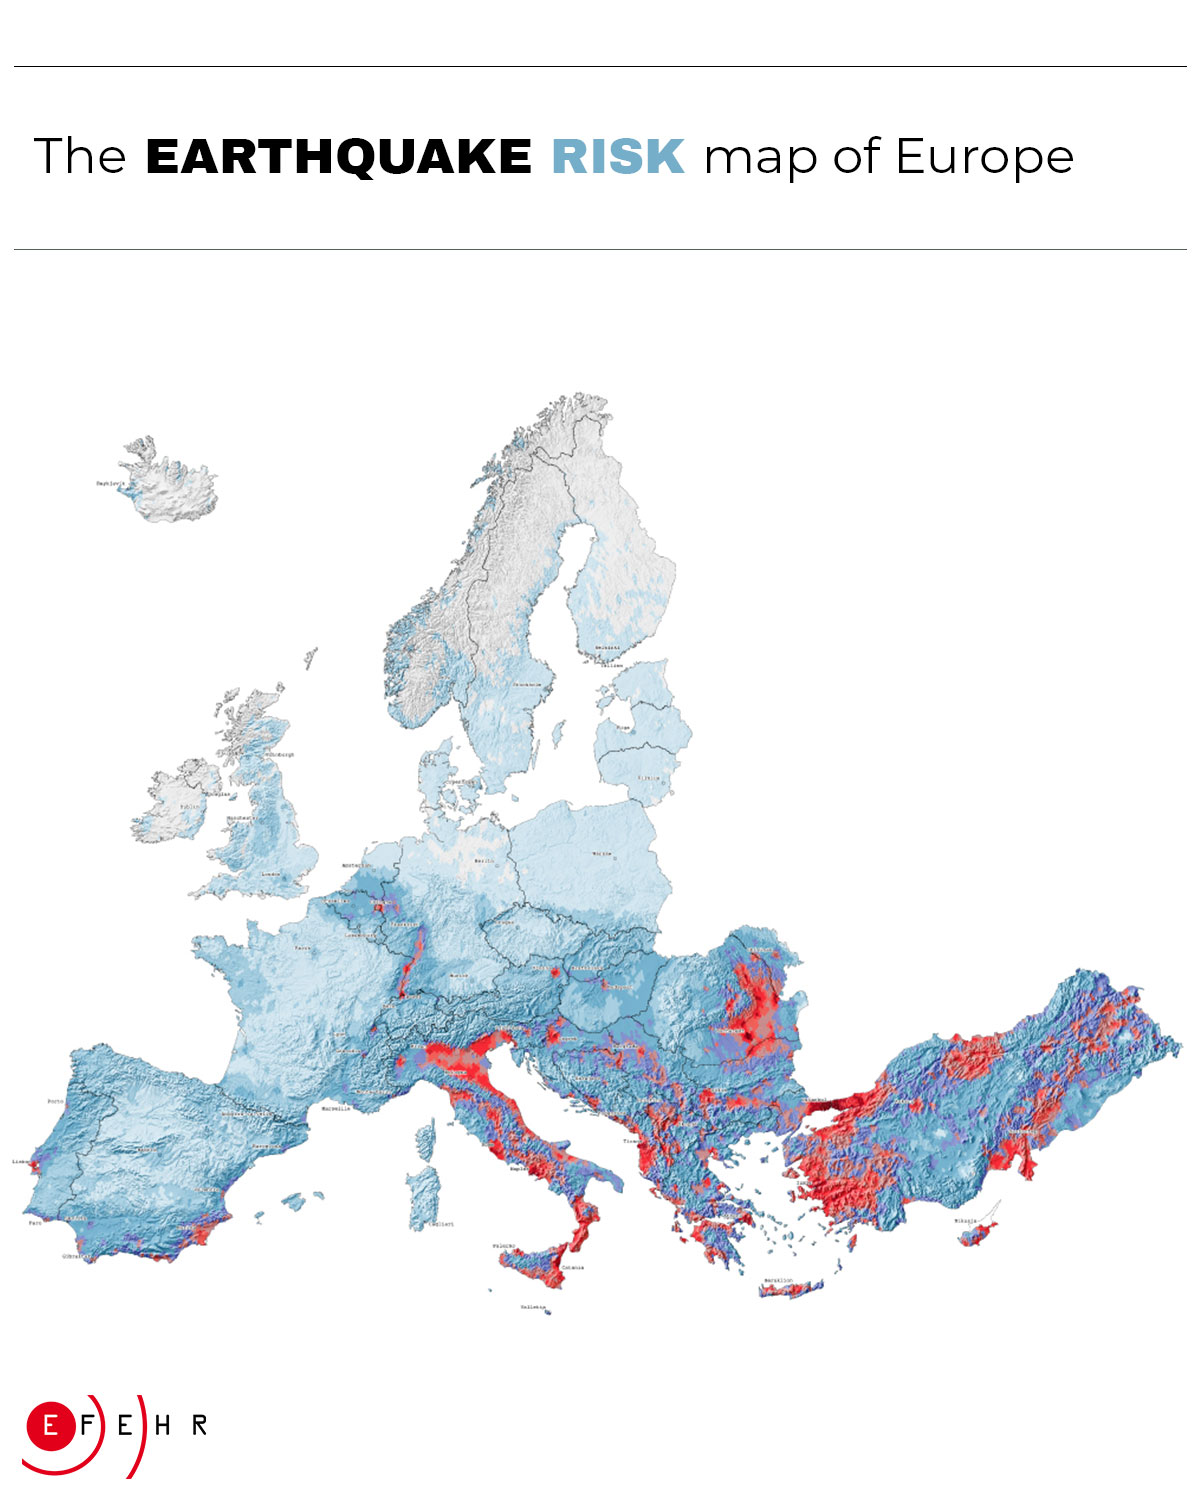 Earthquake risk map of Europe